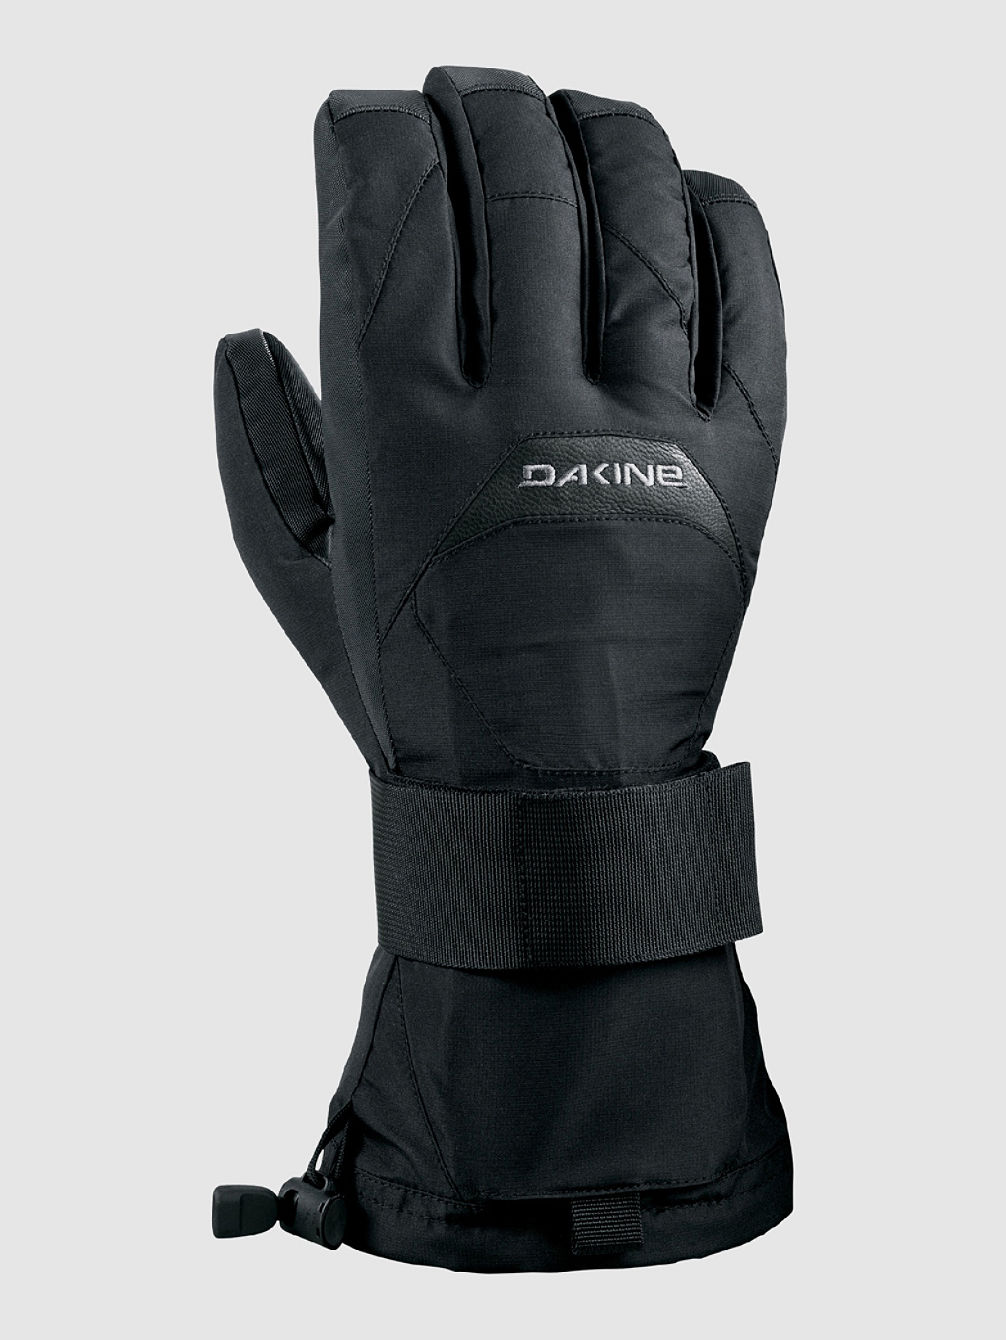 Wristguard Gloves